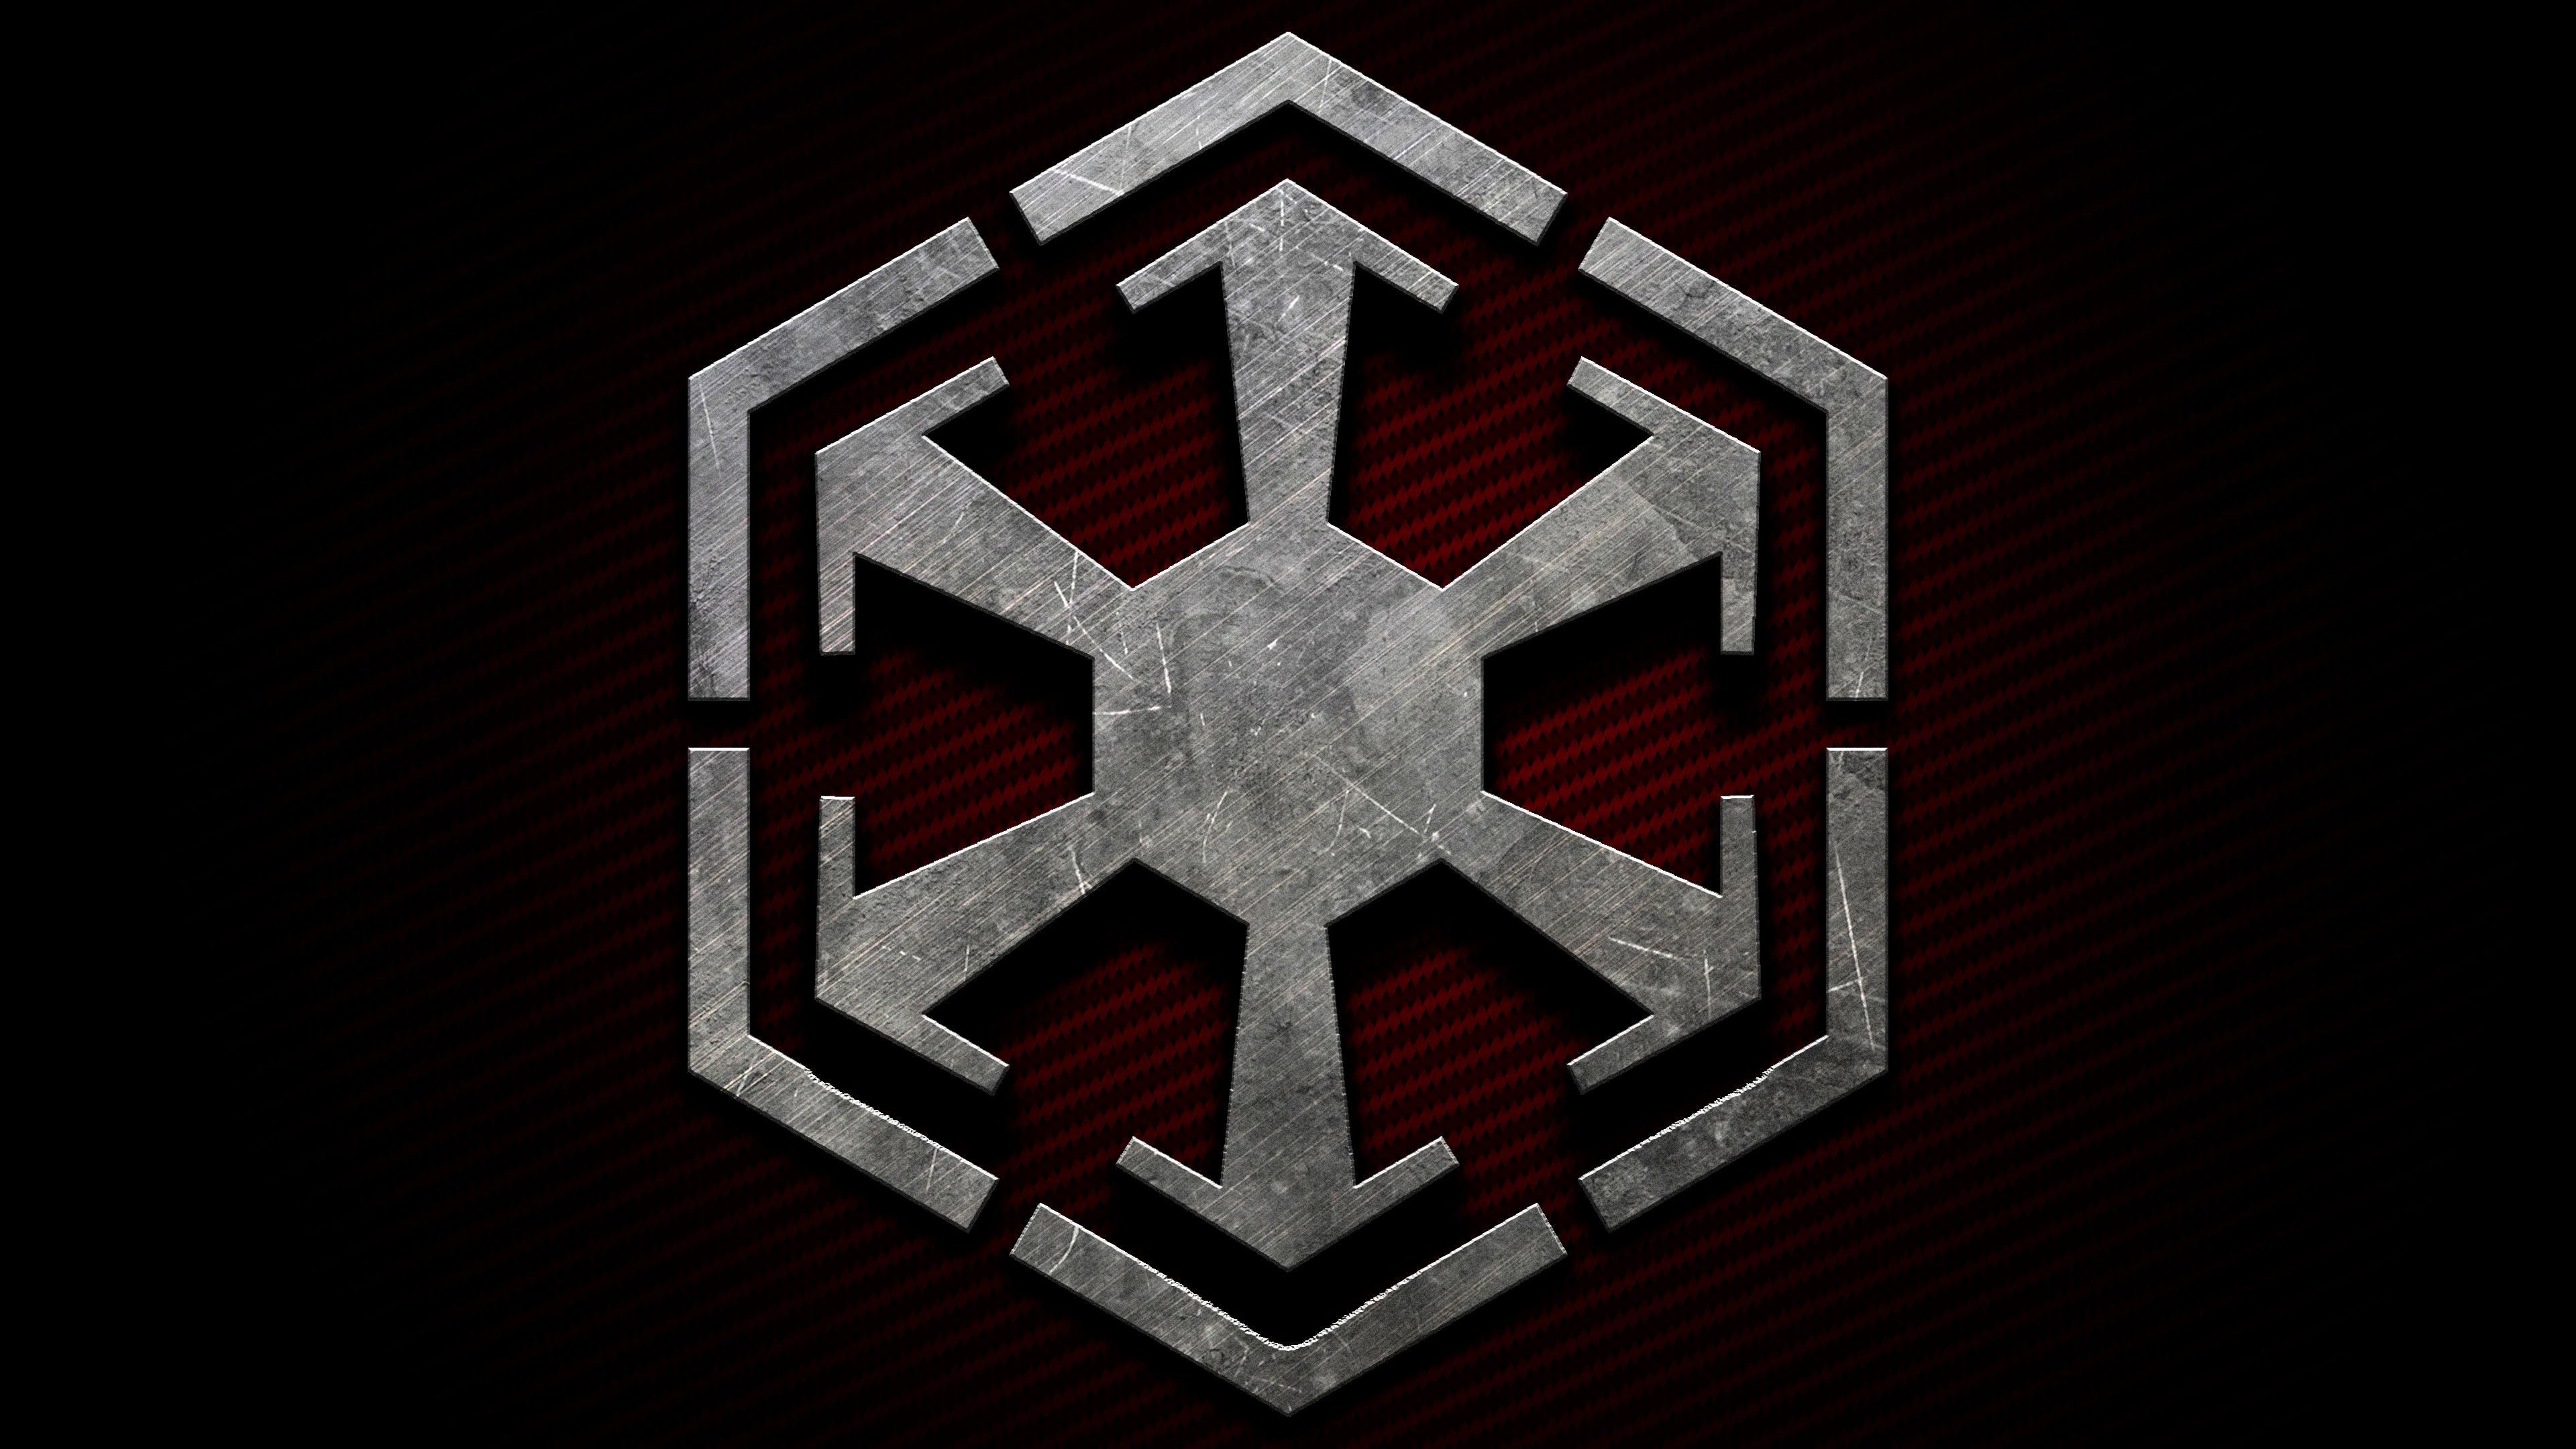 3840x2160 Star Wars: Empire at War | Wookieepedia | Fandom powered by Wikia